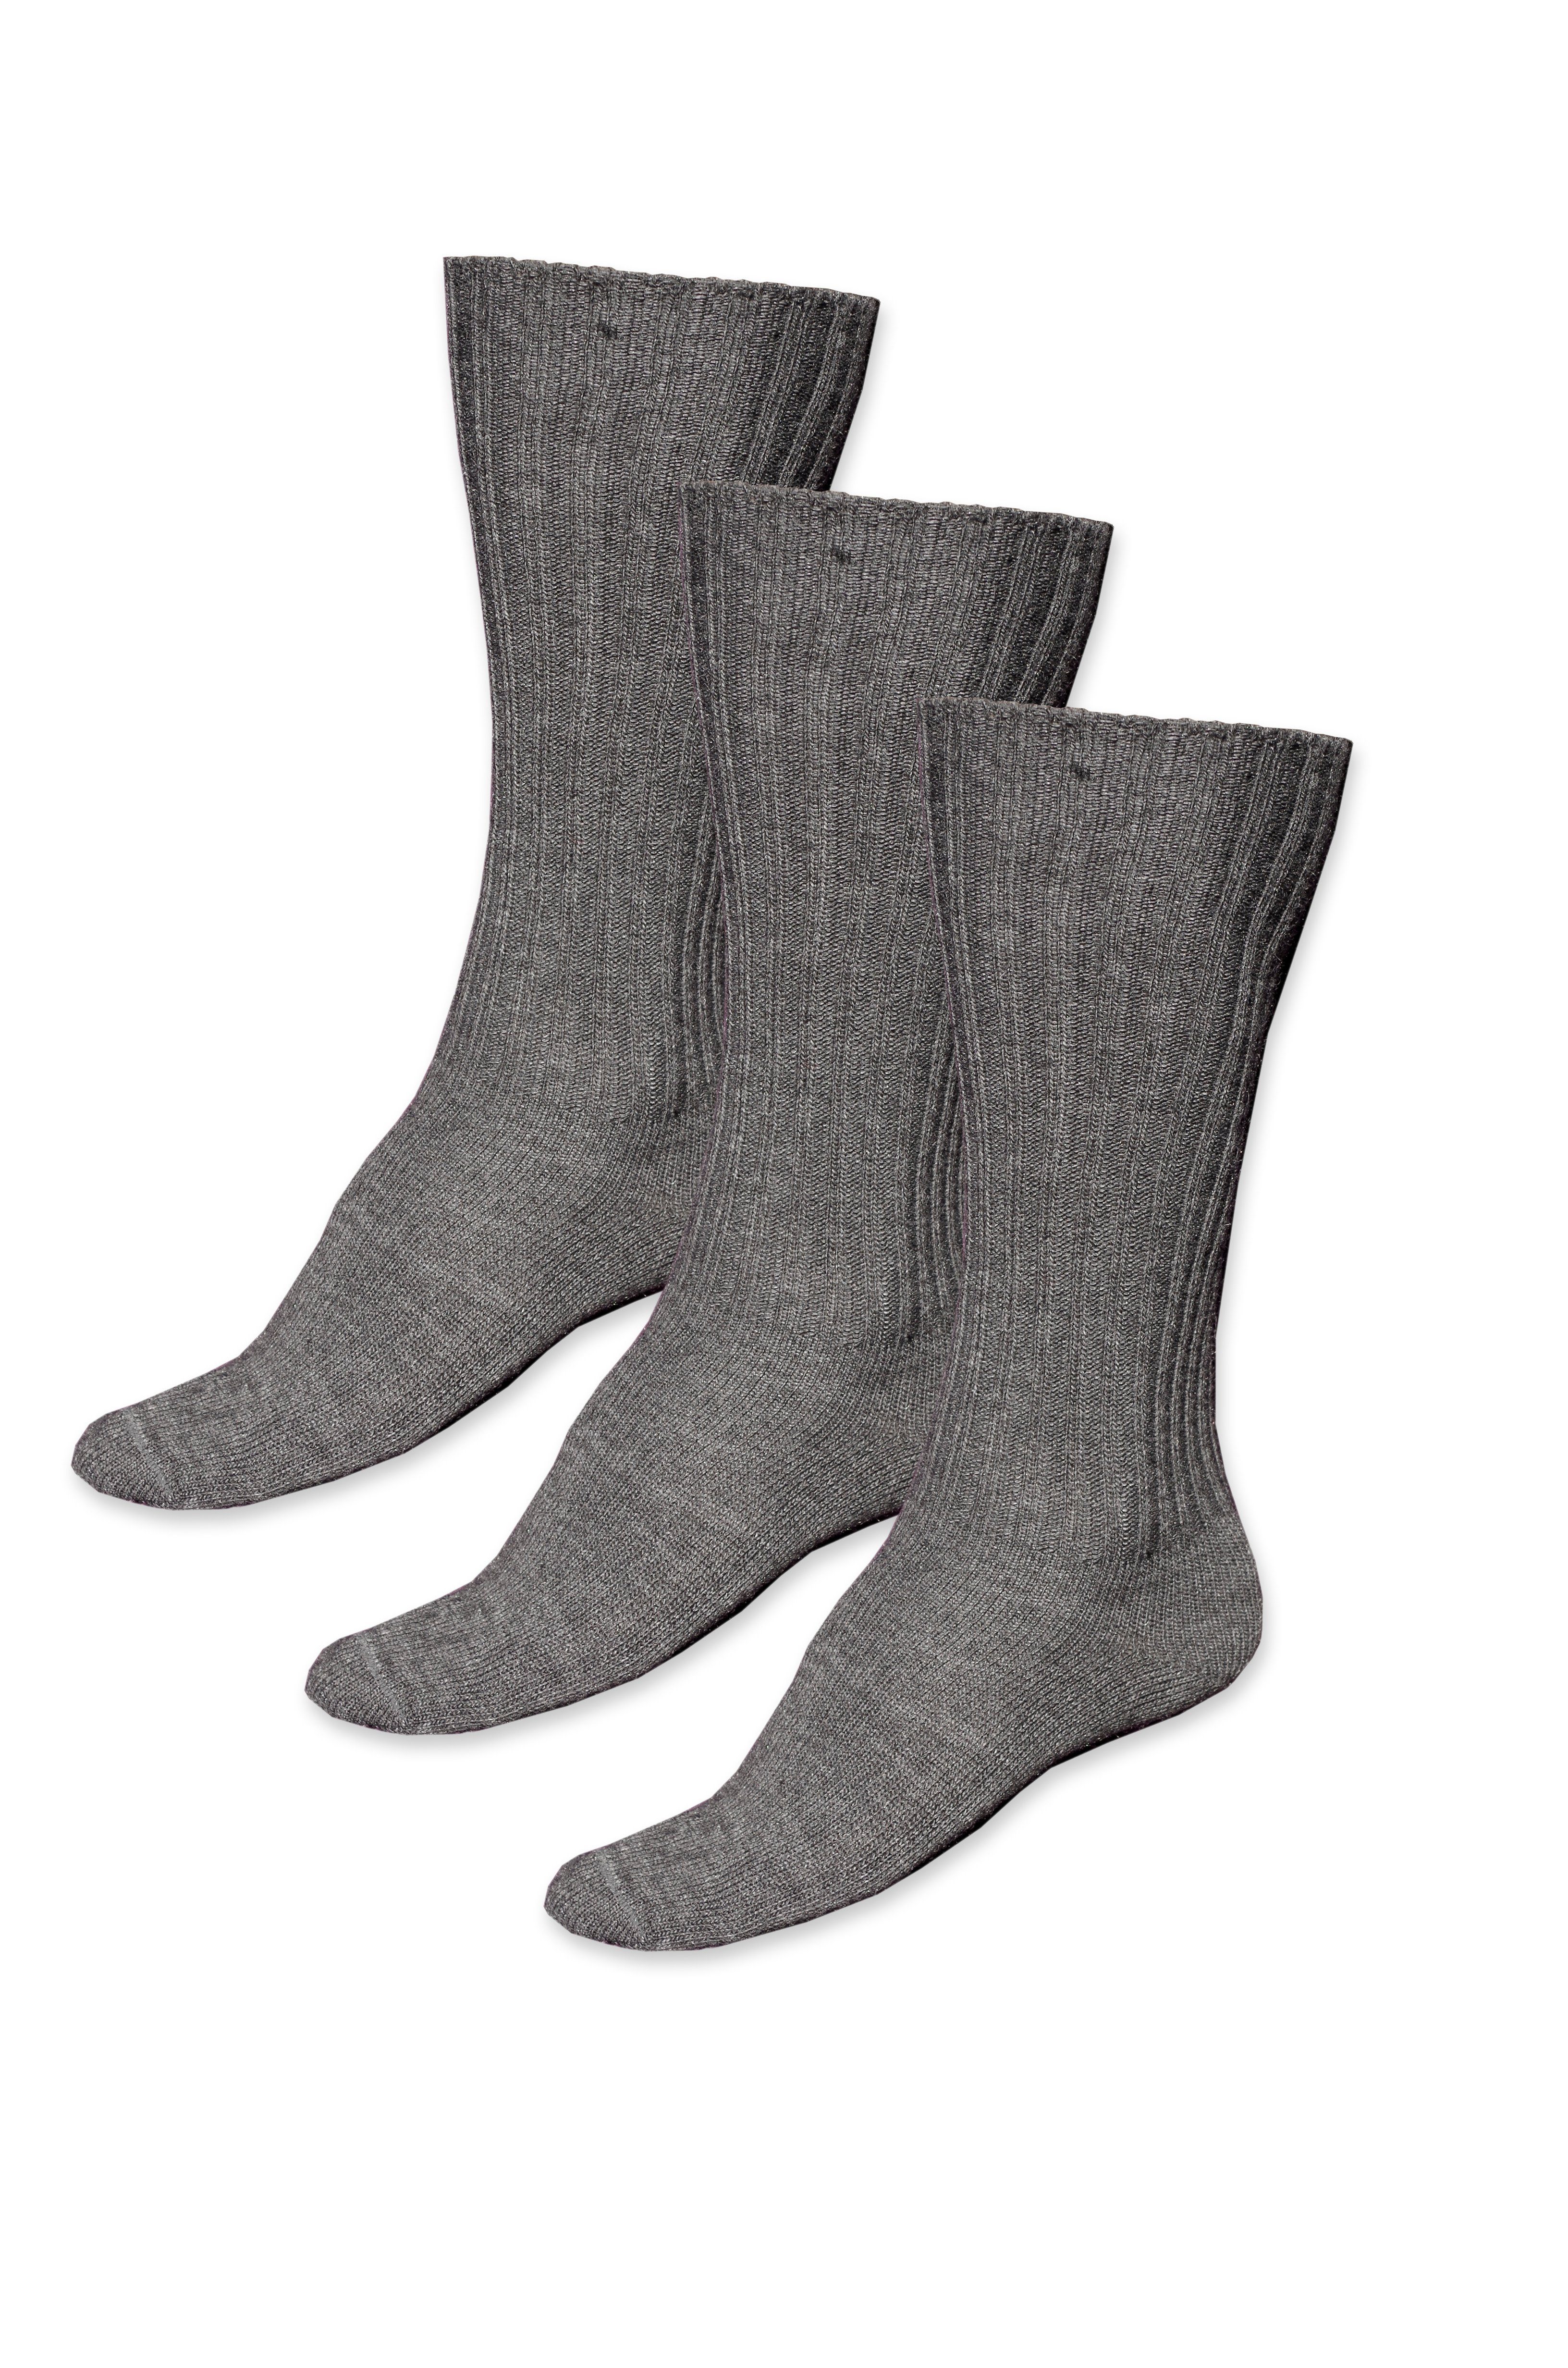 Wäsche/Bademode Strümpfe Posh Gear Socken 3 Paar Alpaka Socken Calzedere (3-Paar)